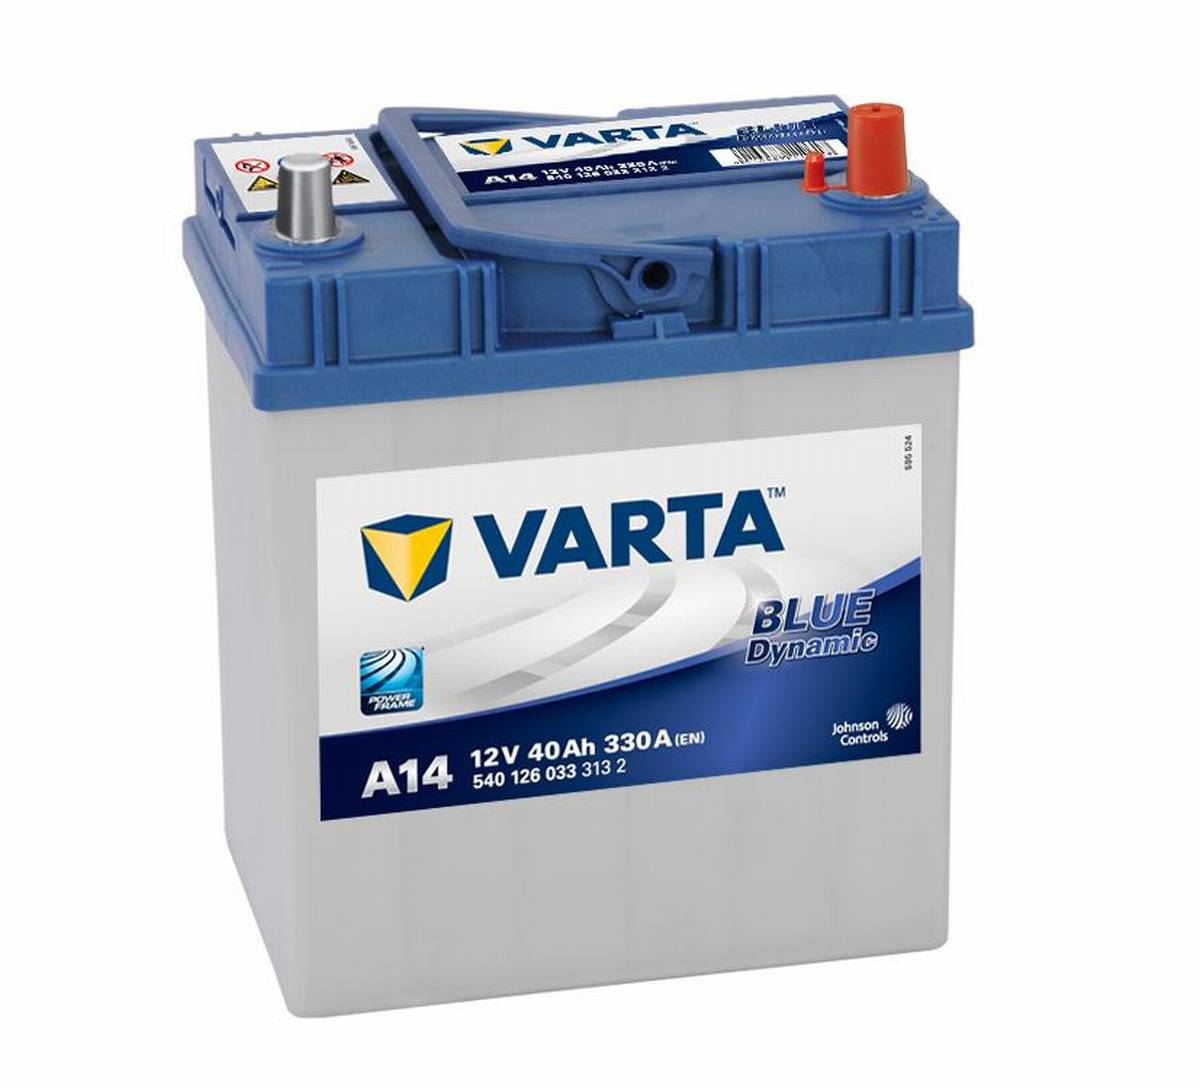 Varta F6 Black Dynamic 590 122 072 Autobatterie 90Ah